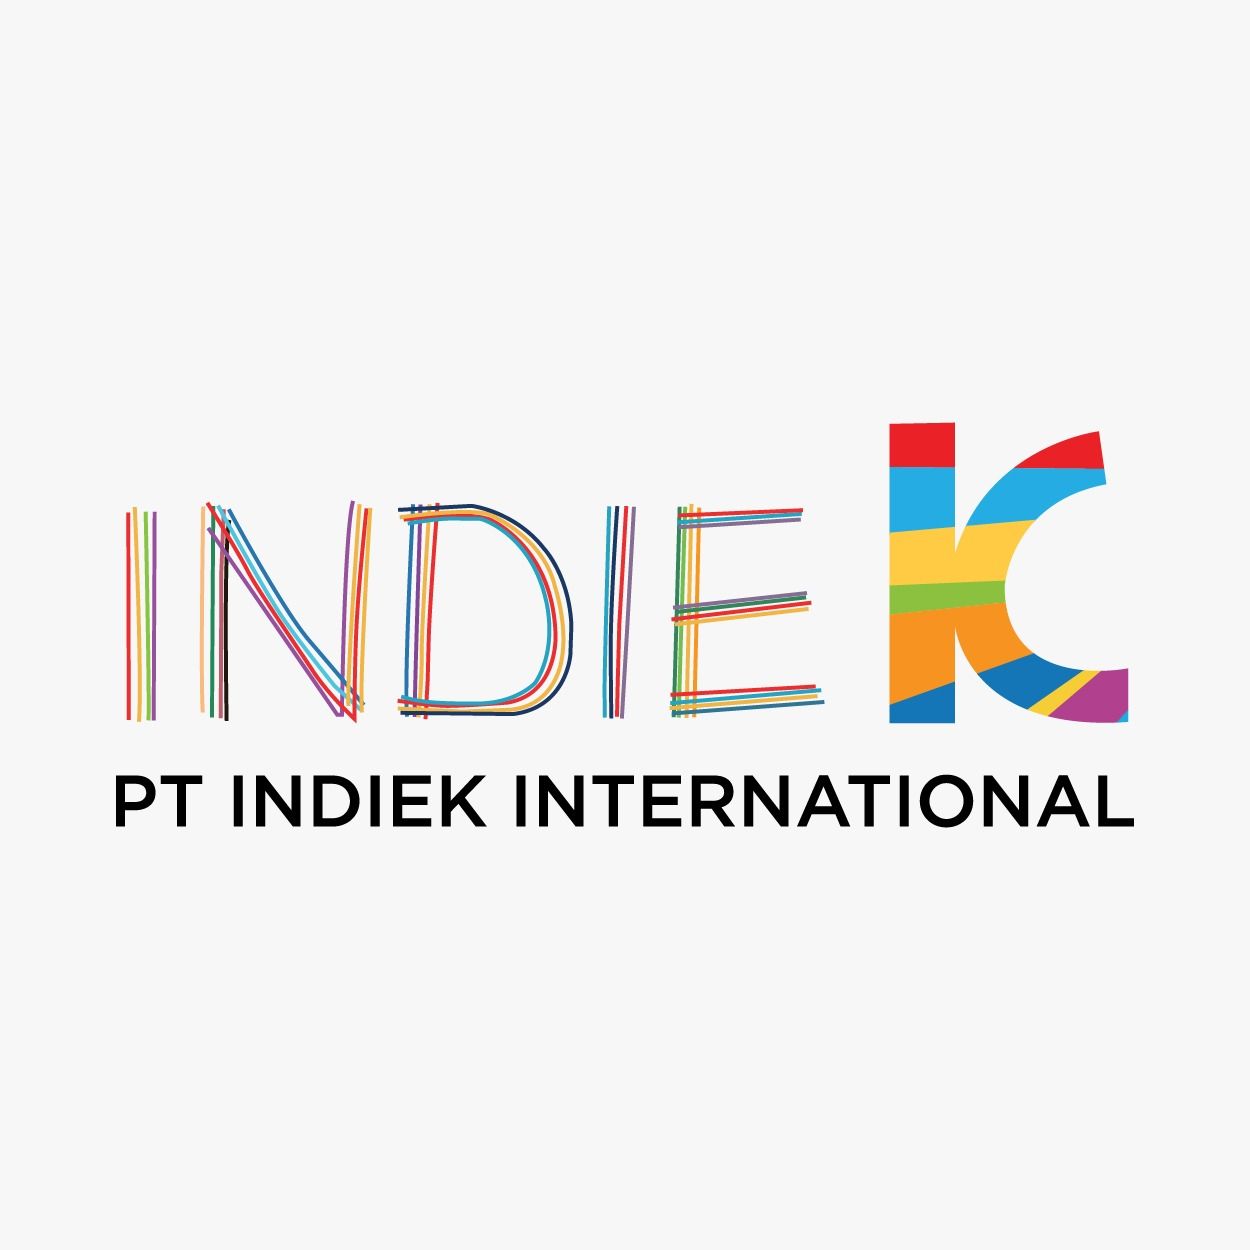 Indiek International